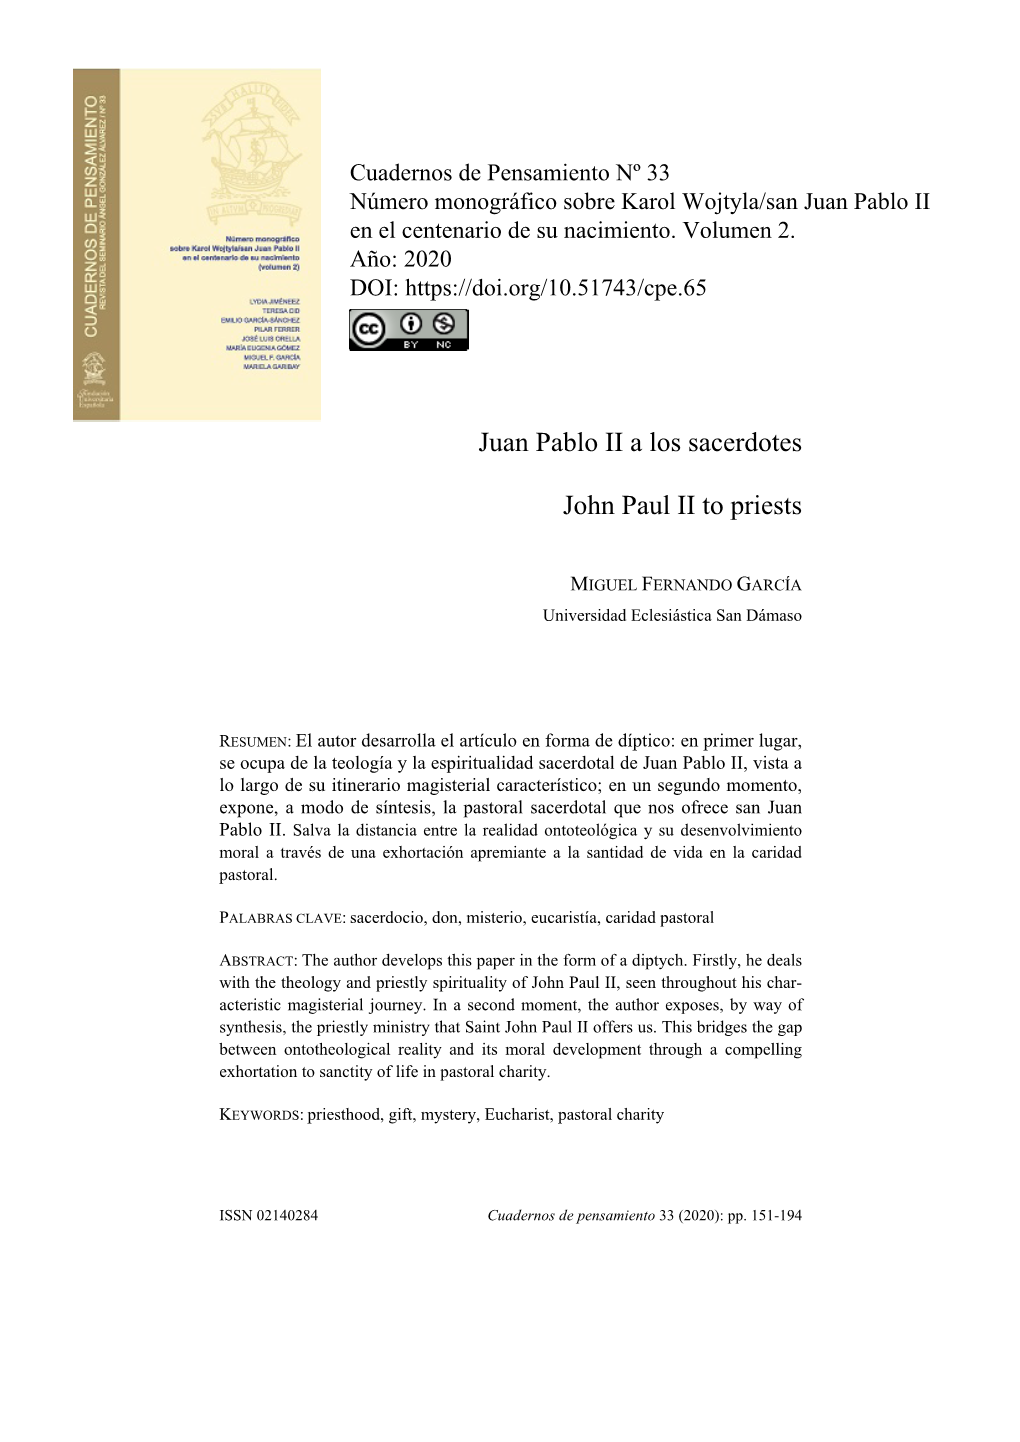 Juan Pablo II a Los Sacerdotes John Paul II to Priests